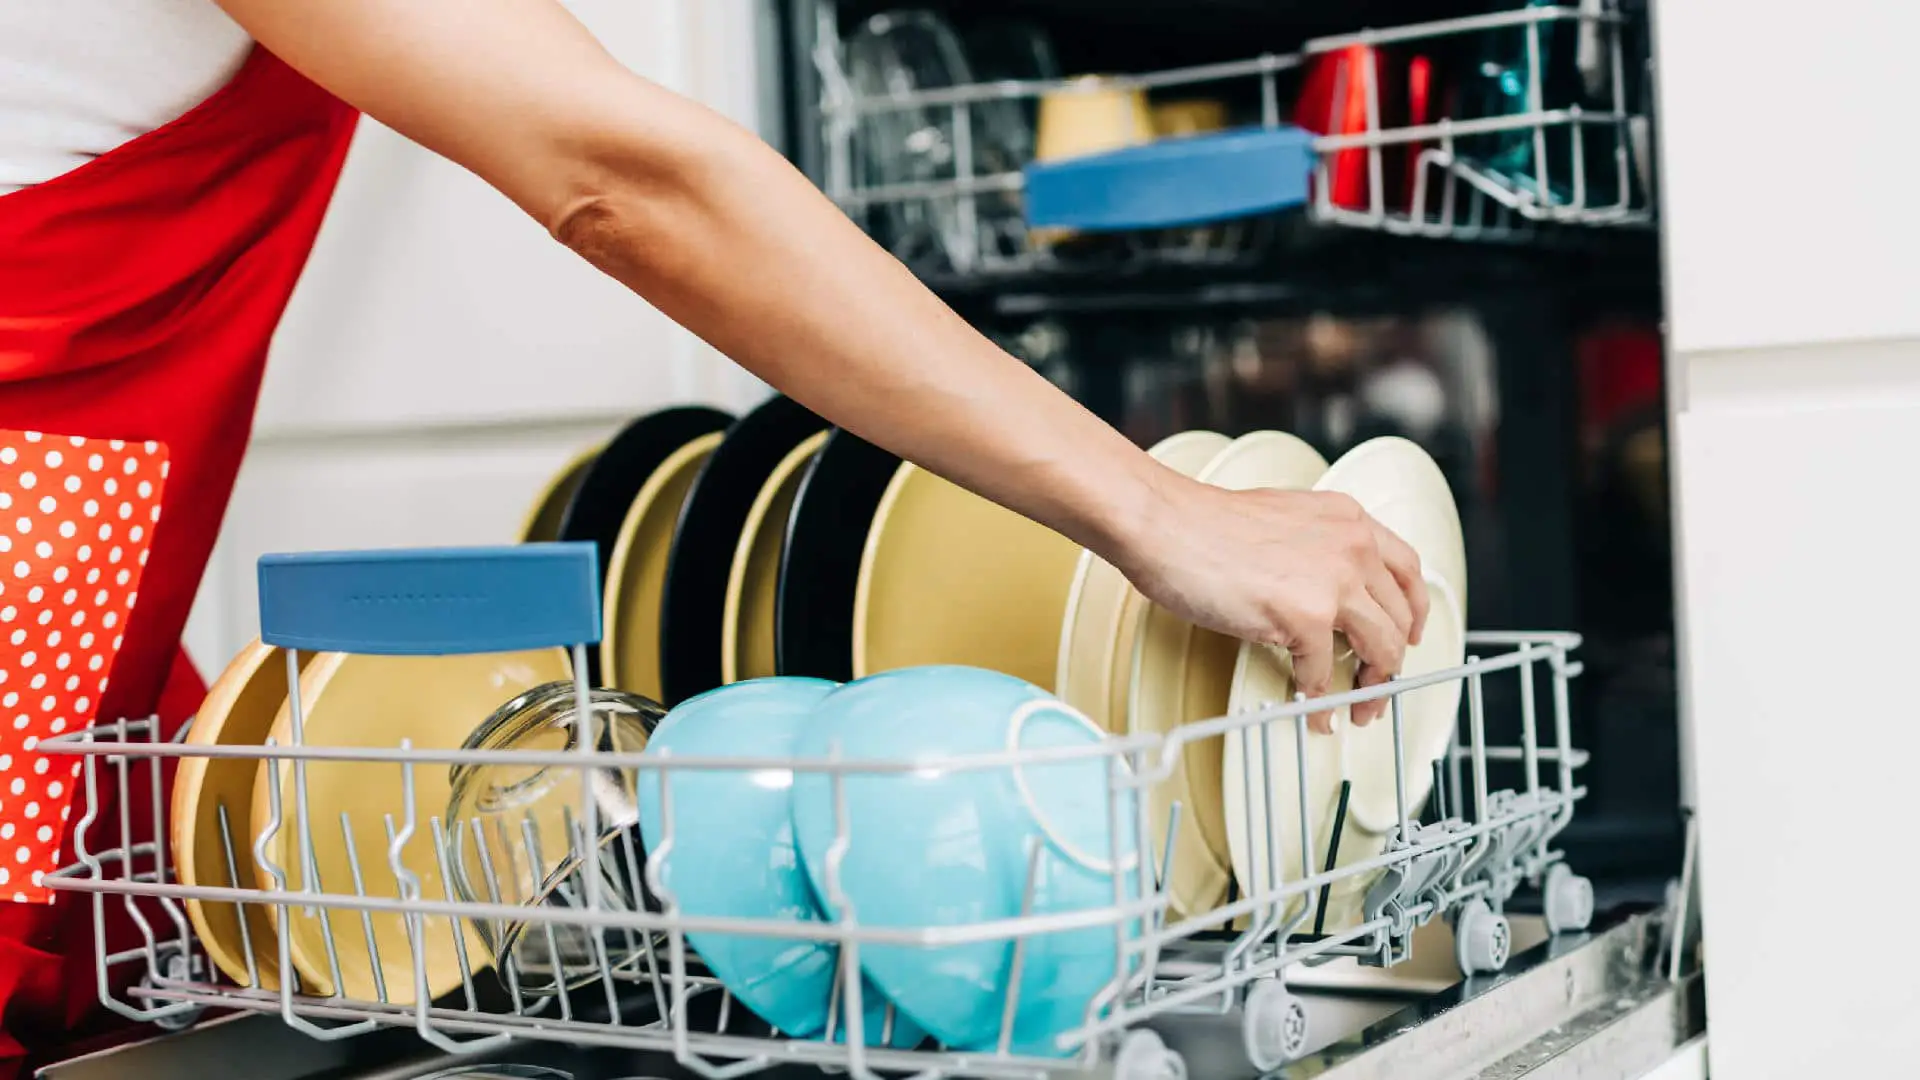 How Do You Manually Drain A Frigidaire Dishwasher